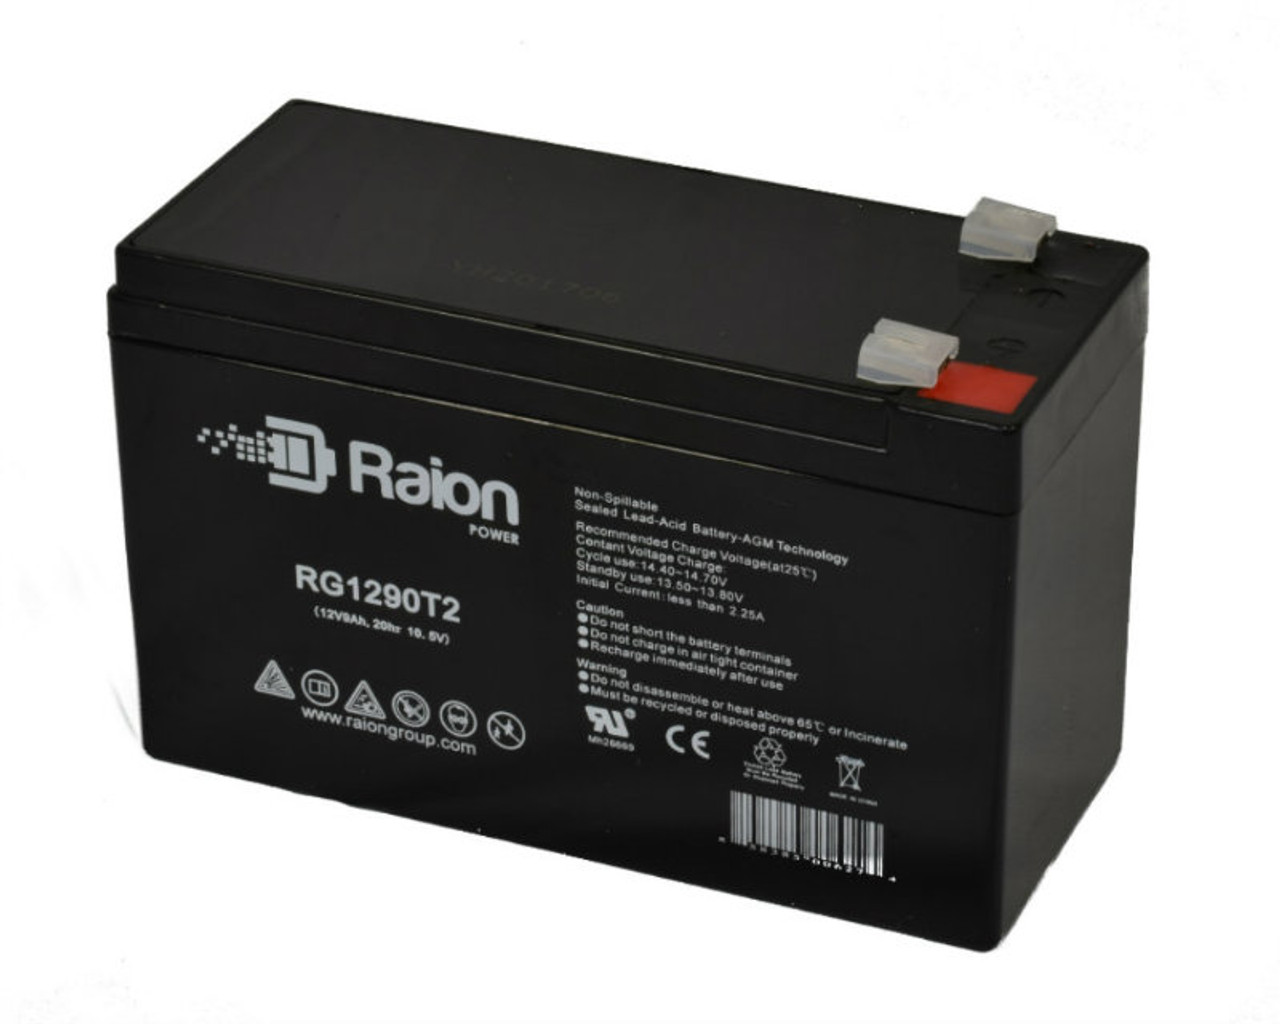 Raion Power RG1290T2 12V 9Ah AGM Battery for Amptek AT12-9